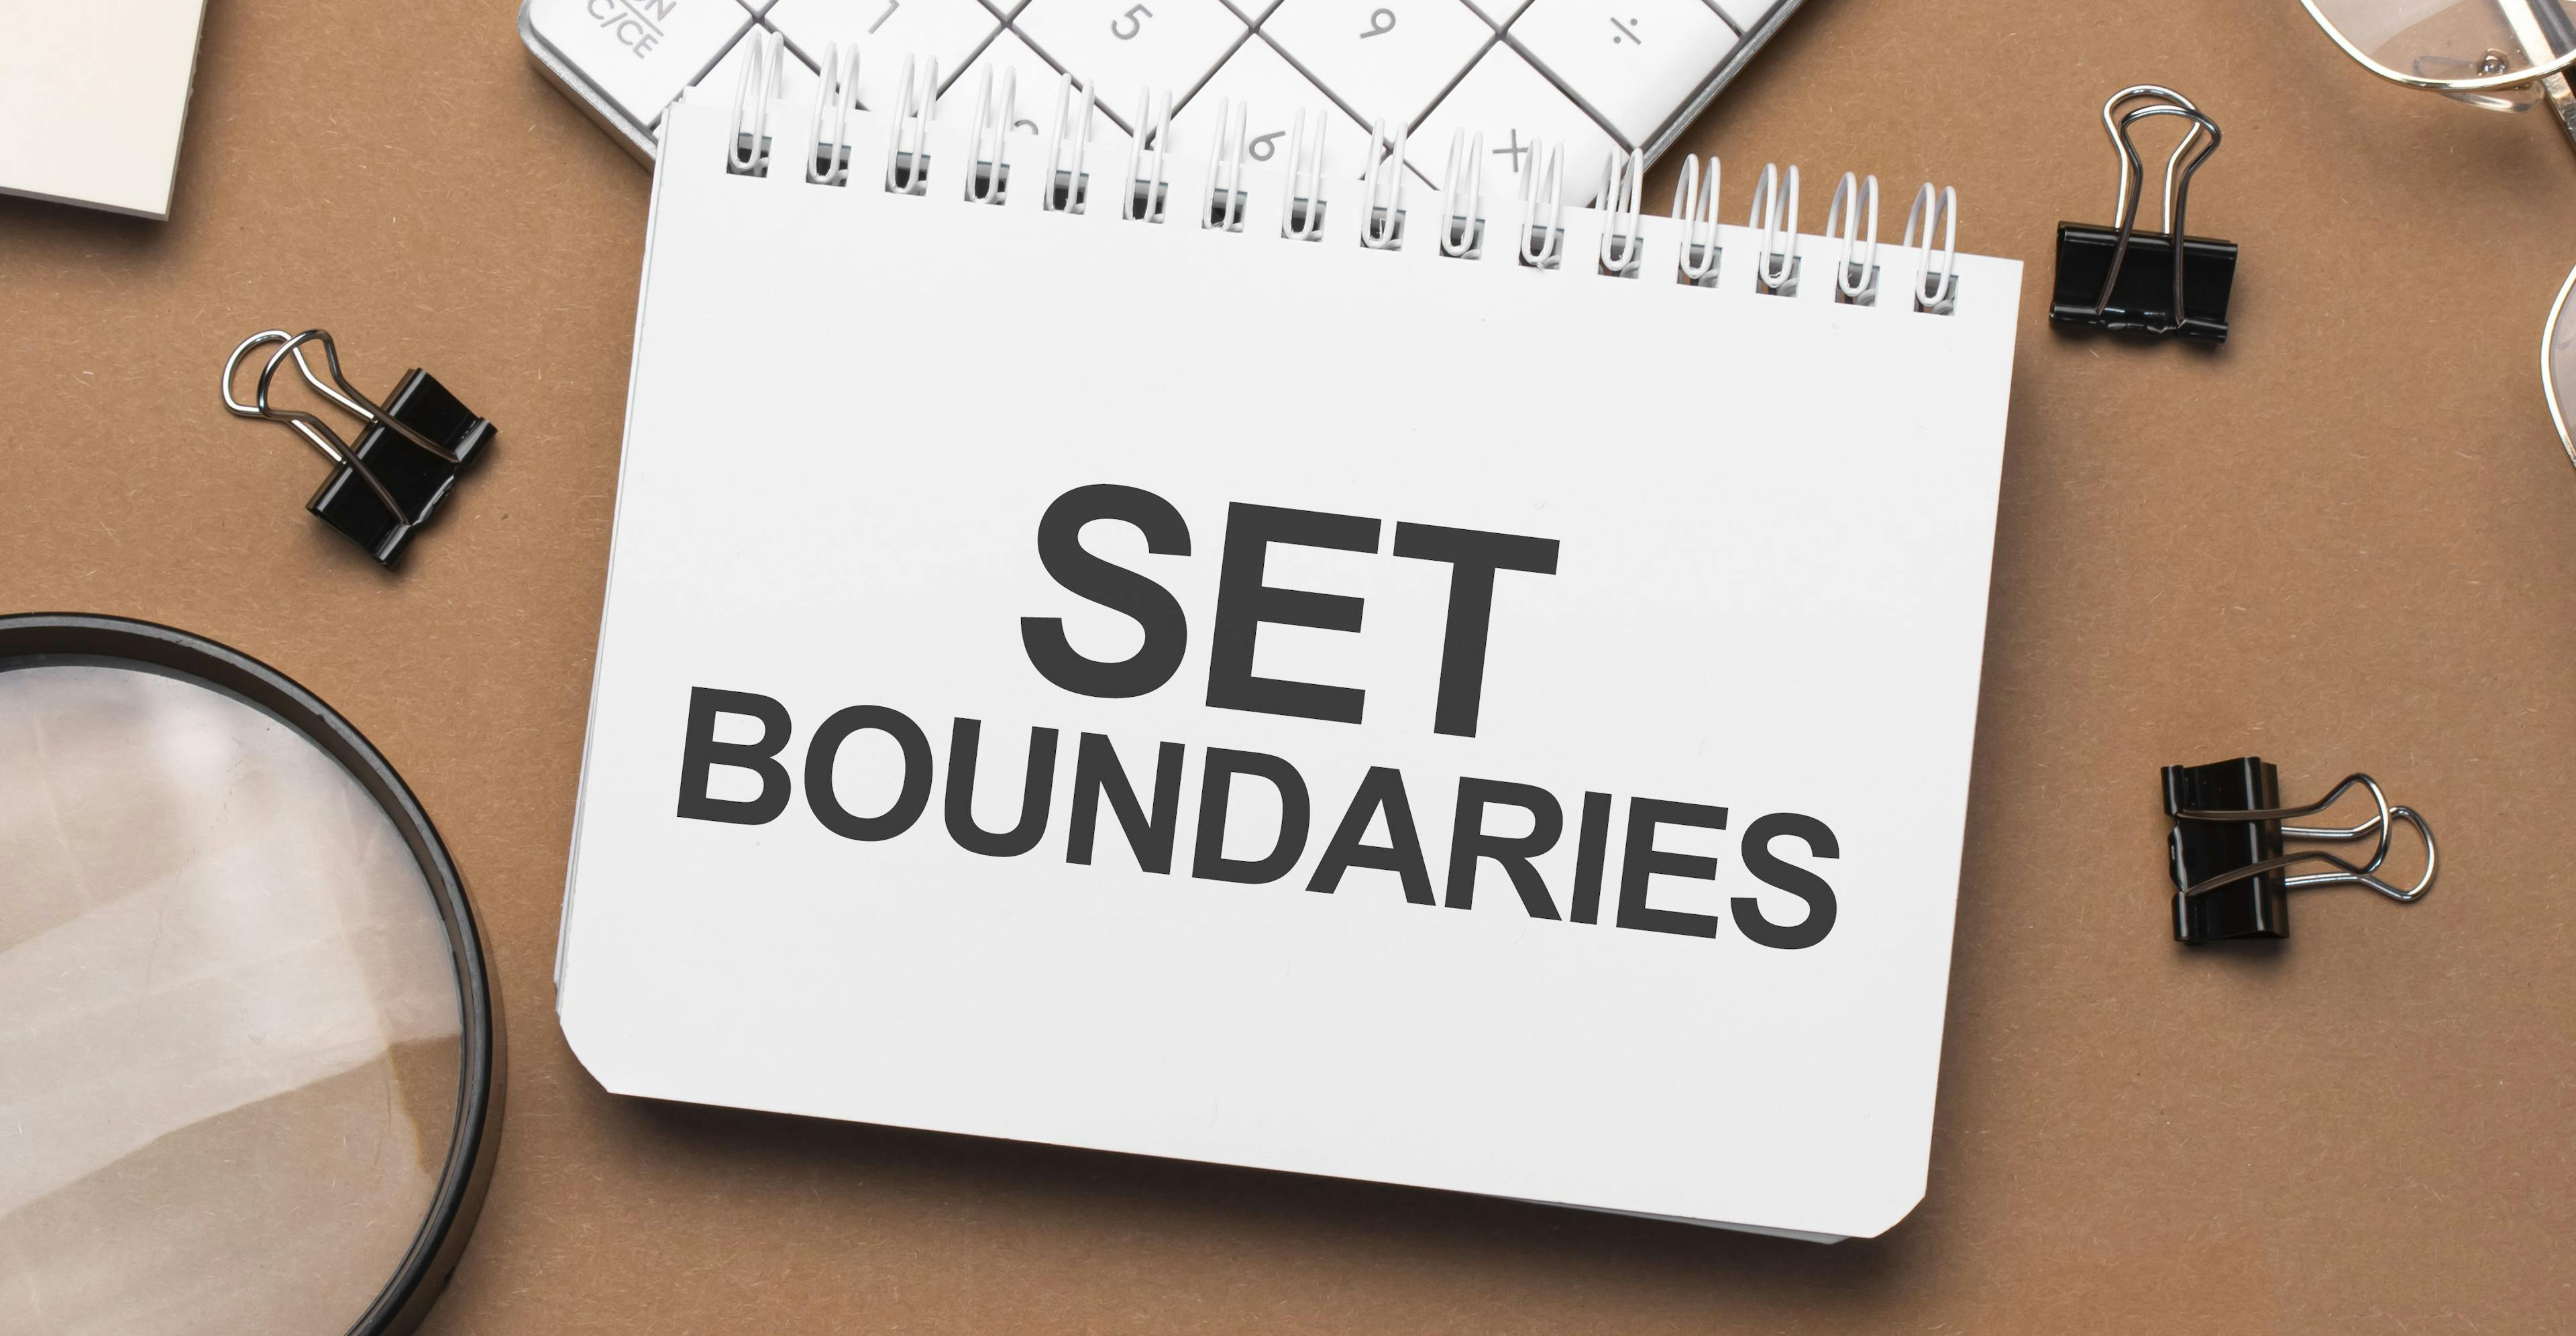 set boundaries sign on office desk